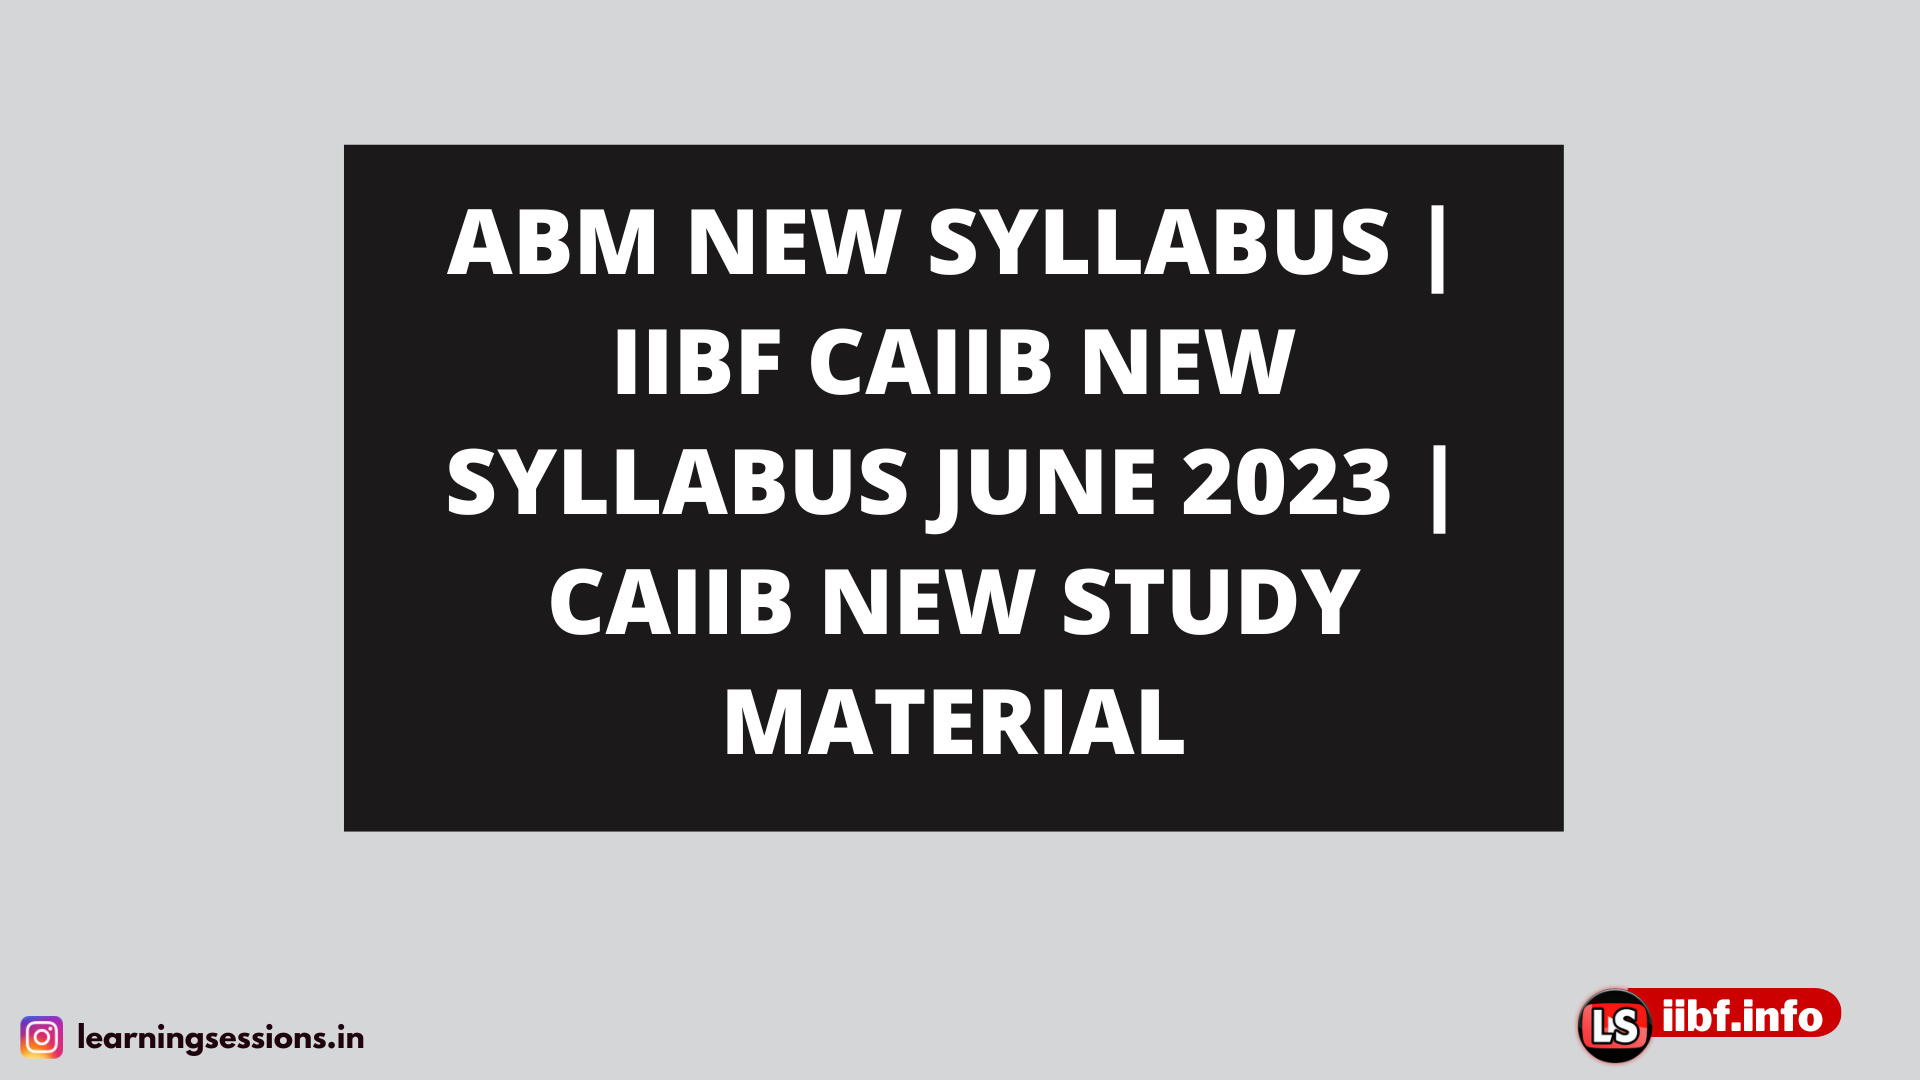 ABM NEW SYLLABUS | IIBF CAIIB NEW SYLLABUS JUNE 2023 | CAIIB NEW STUDY MATERIAL